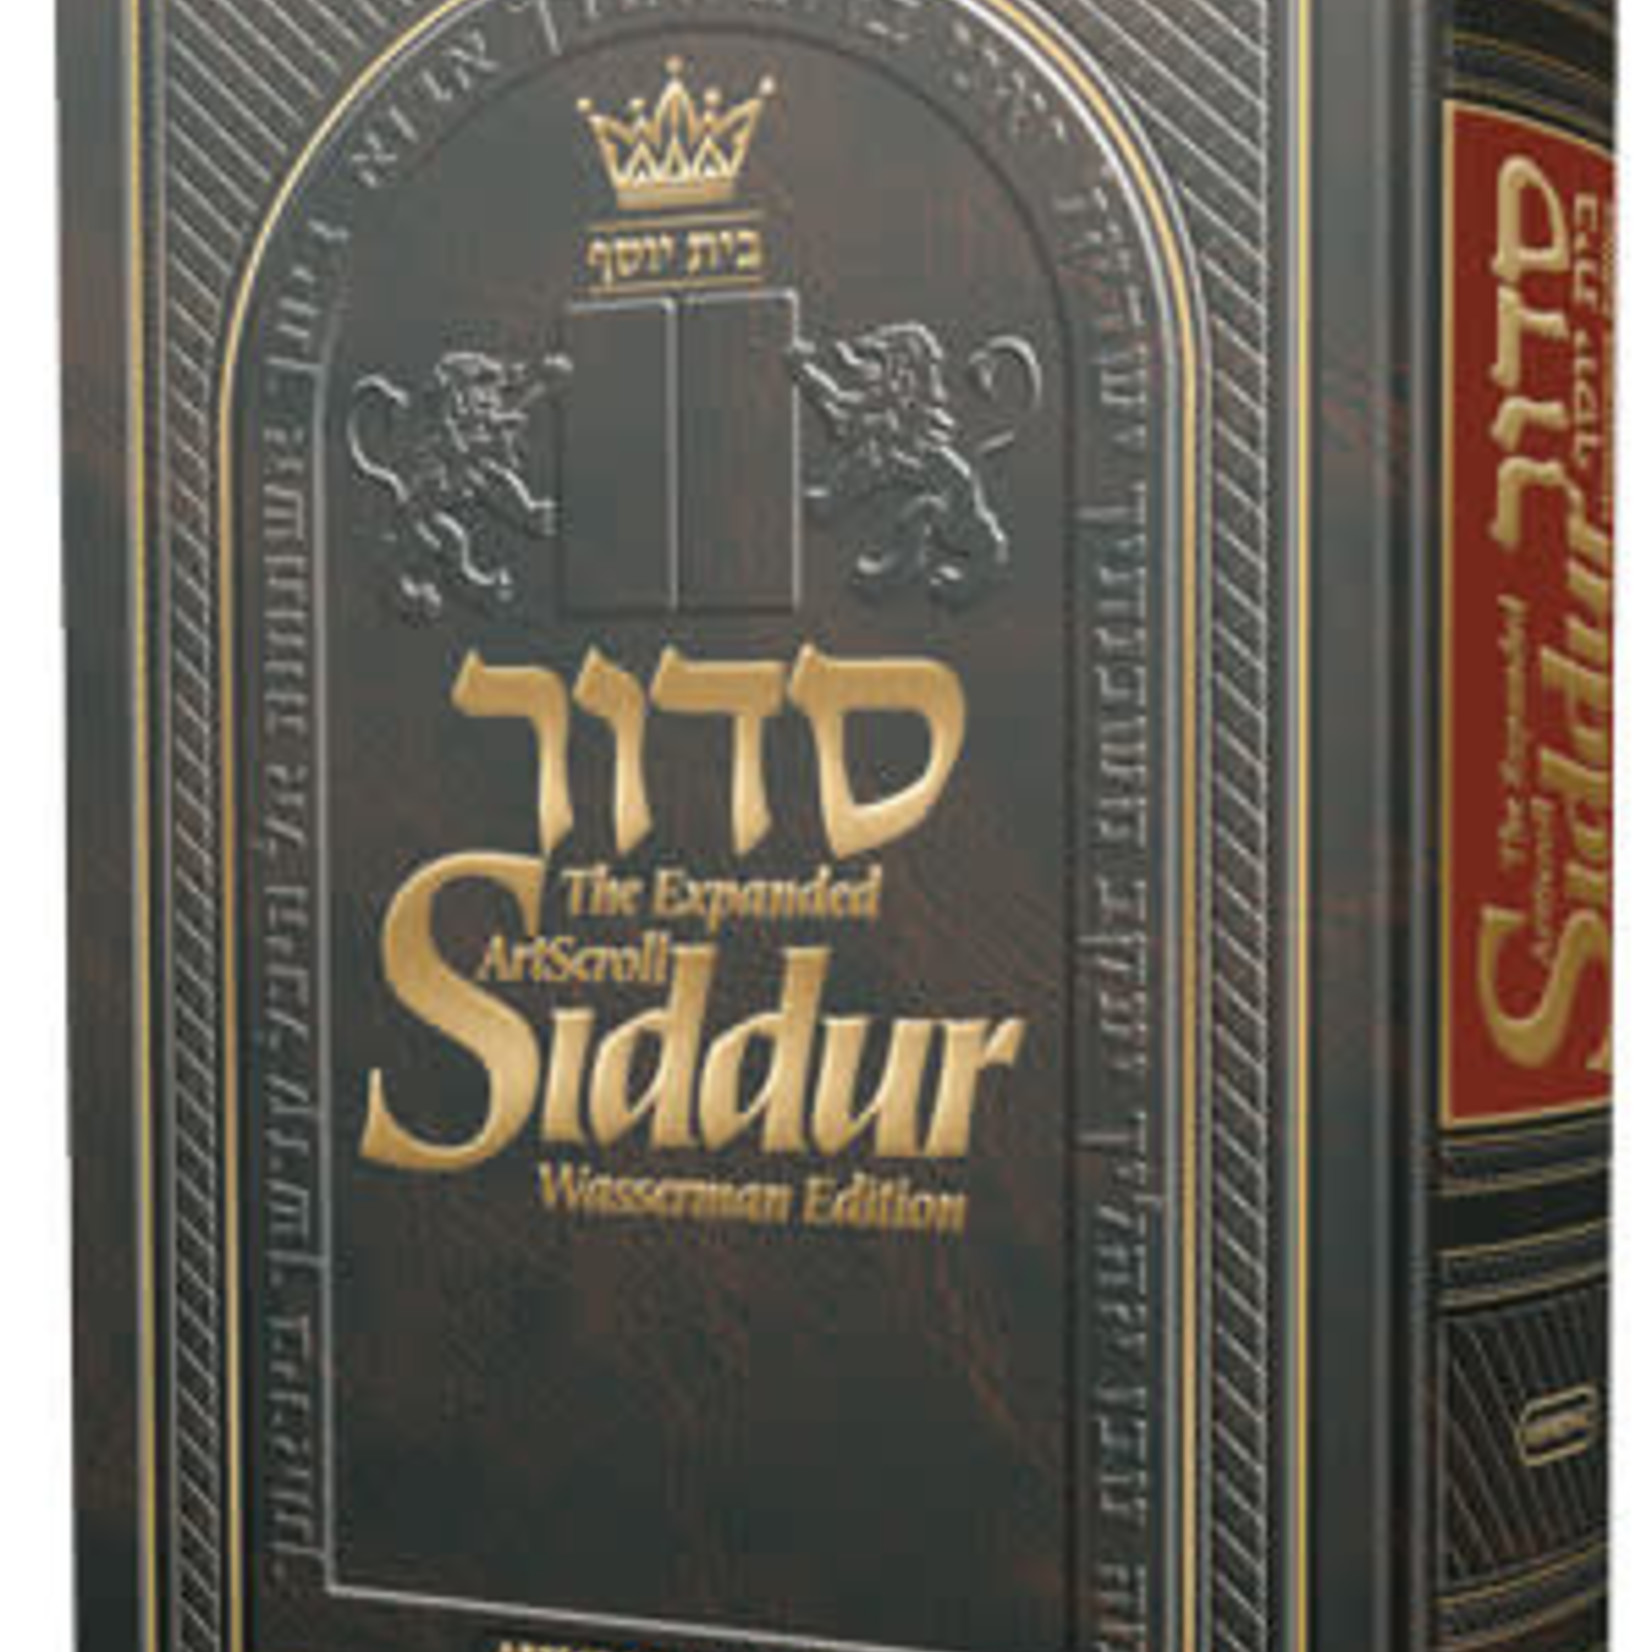 The NEW, Expanded ArtScroll Hebrew/English Siddur - Wasserman Edition Full Size Ashkenaz [Hardcover- Full Size]